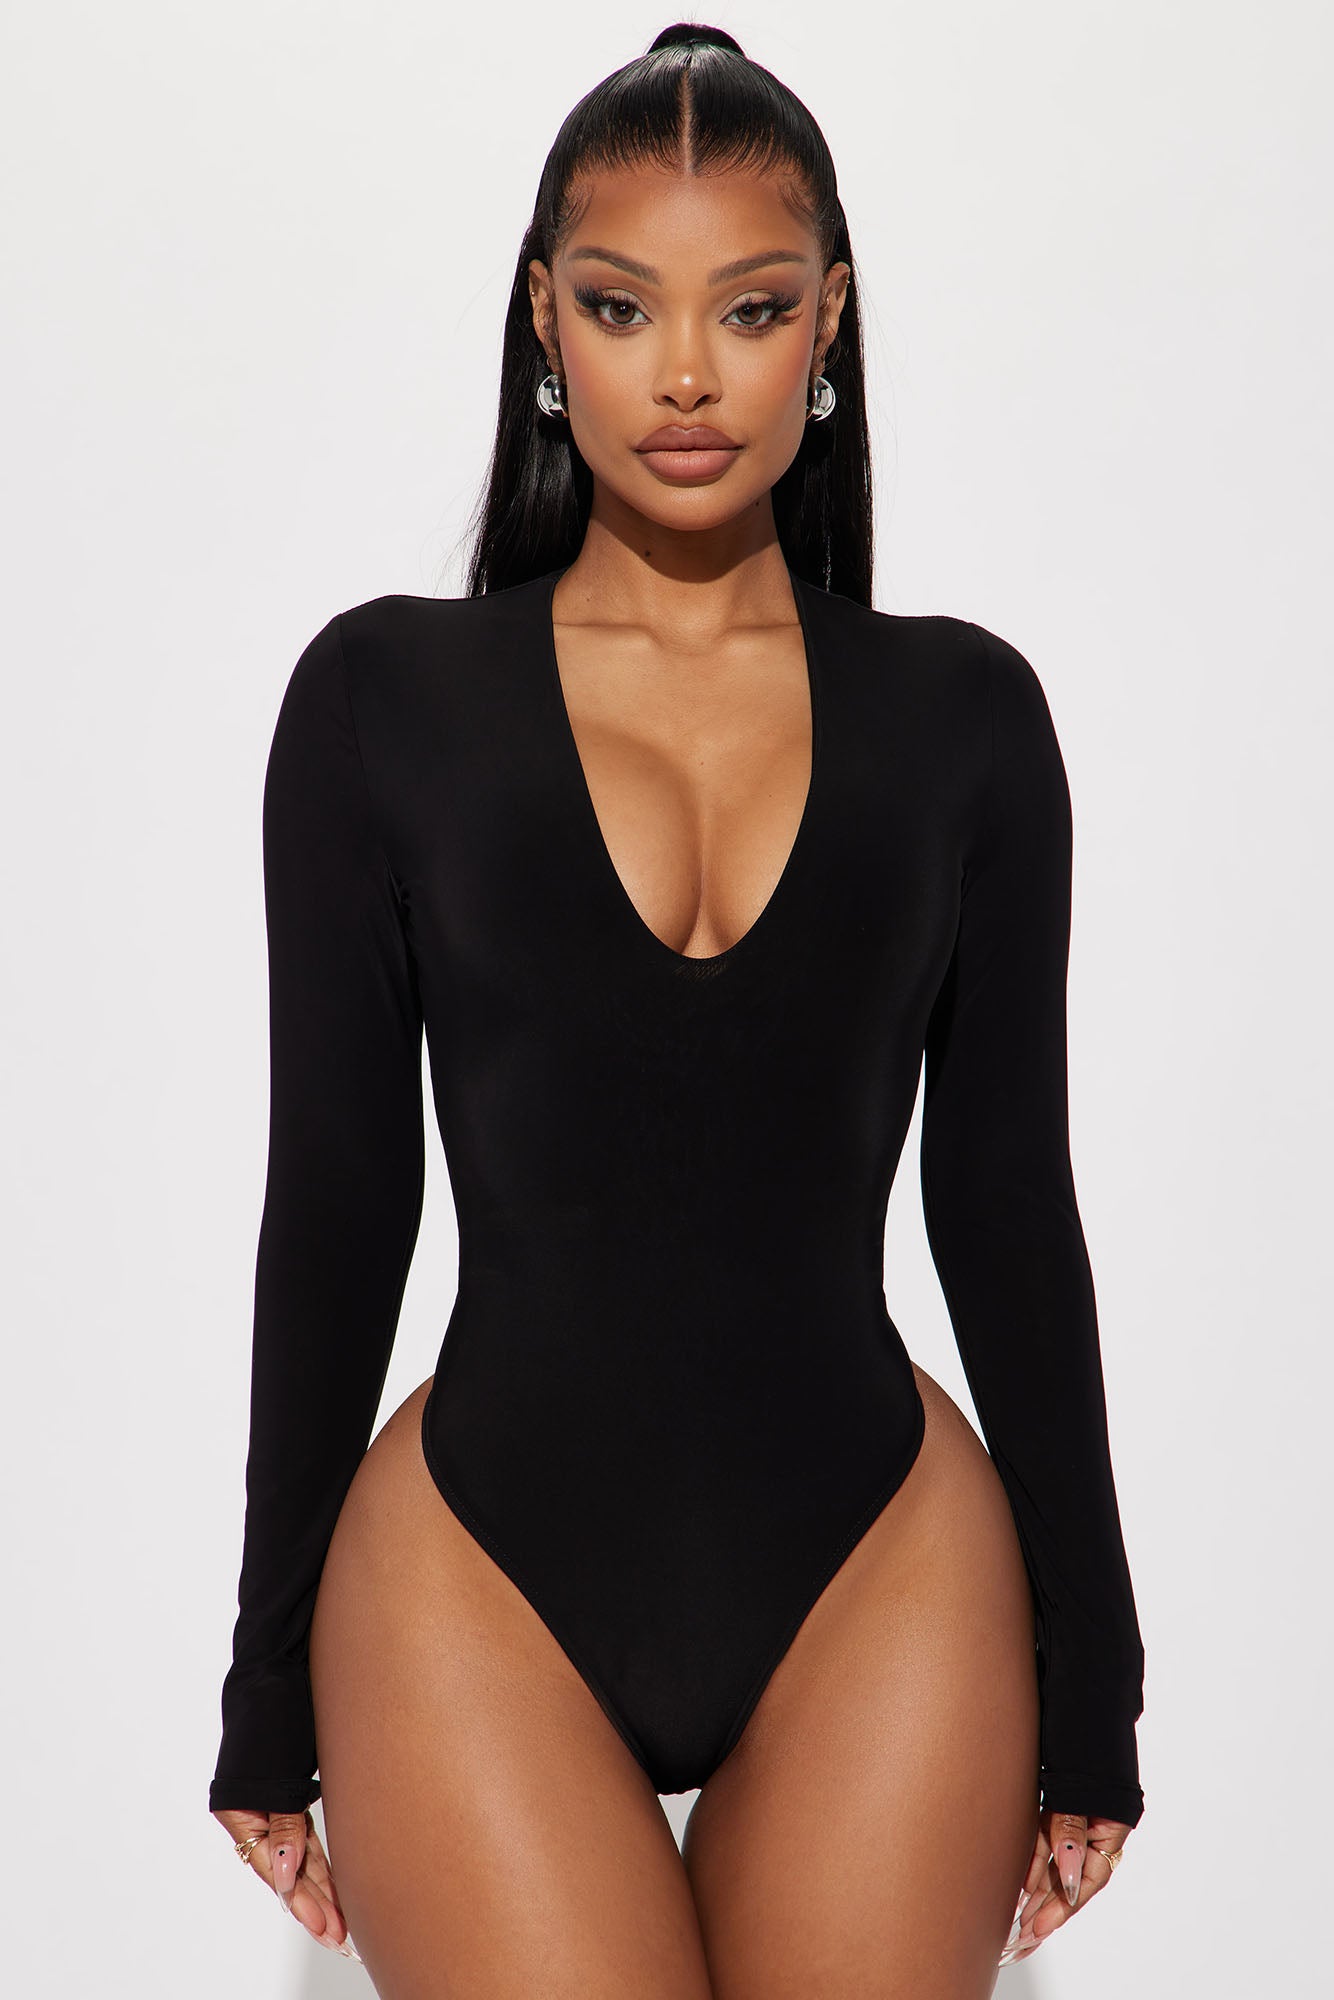 Black Bodysuits, Cheap Black Bodysuits, Sexy Black Bodysuits for